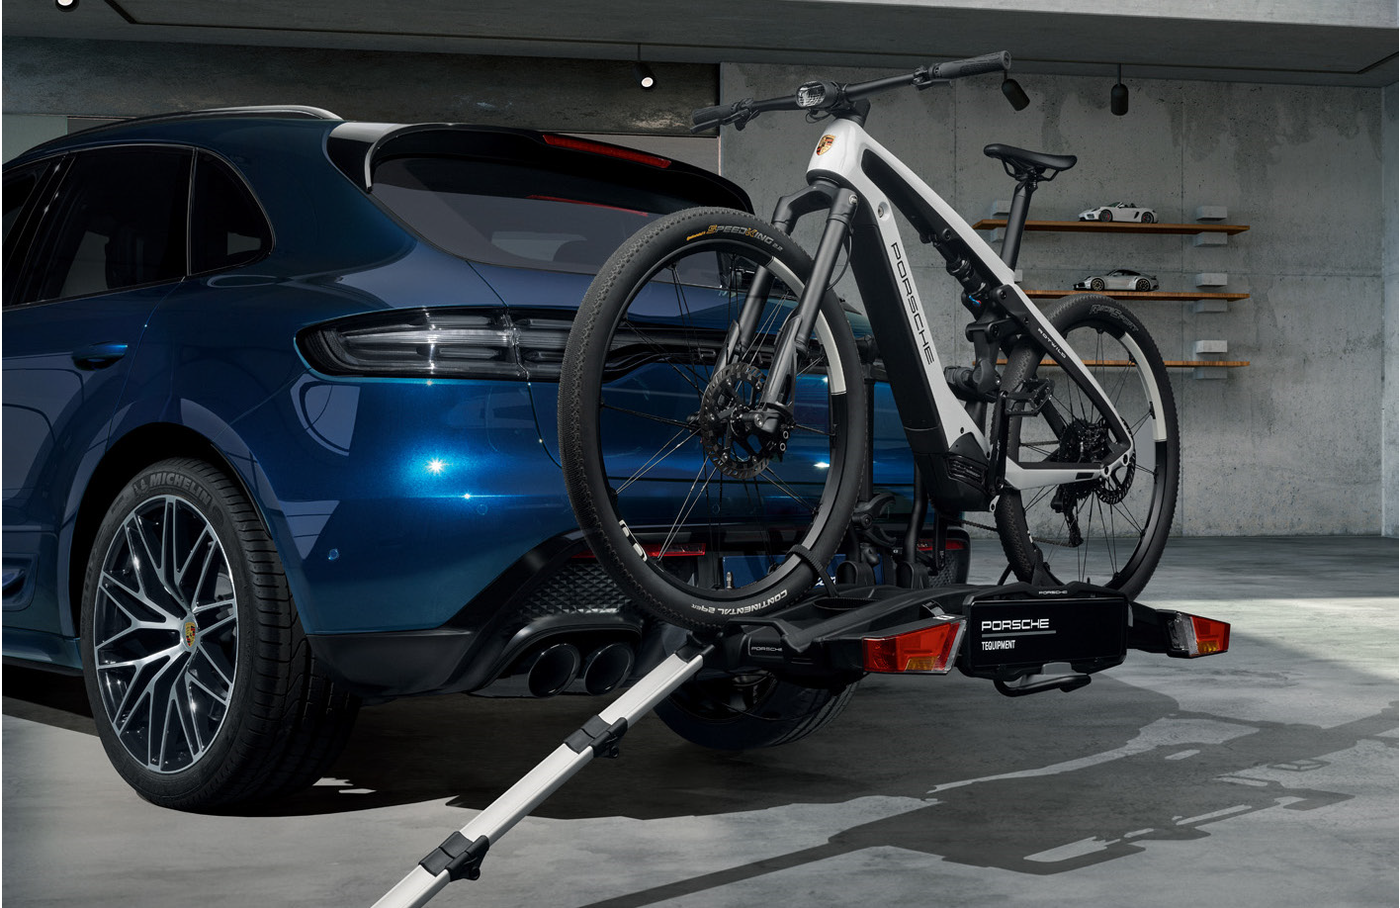 Porsche Bike Loading Ramp for Rear Bike Carrier